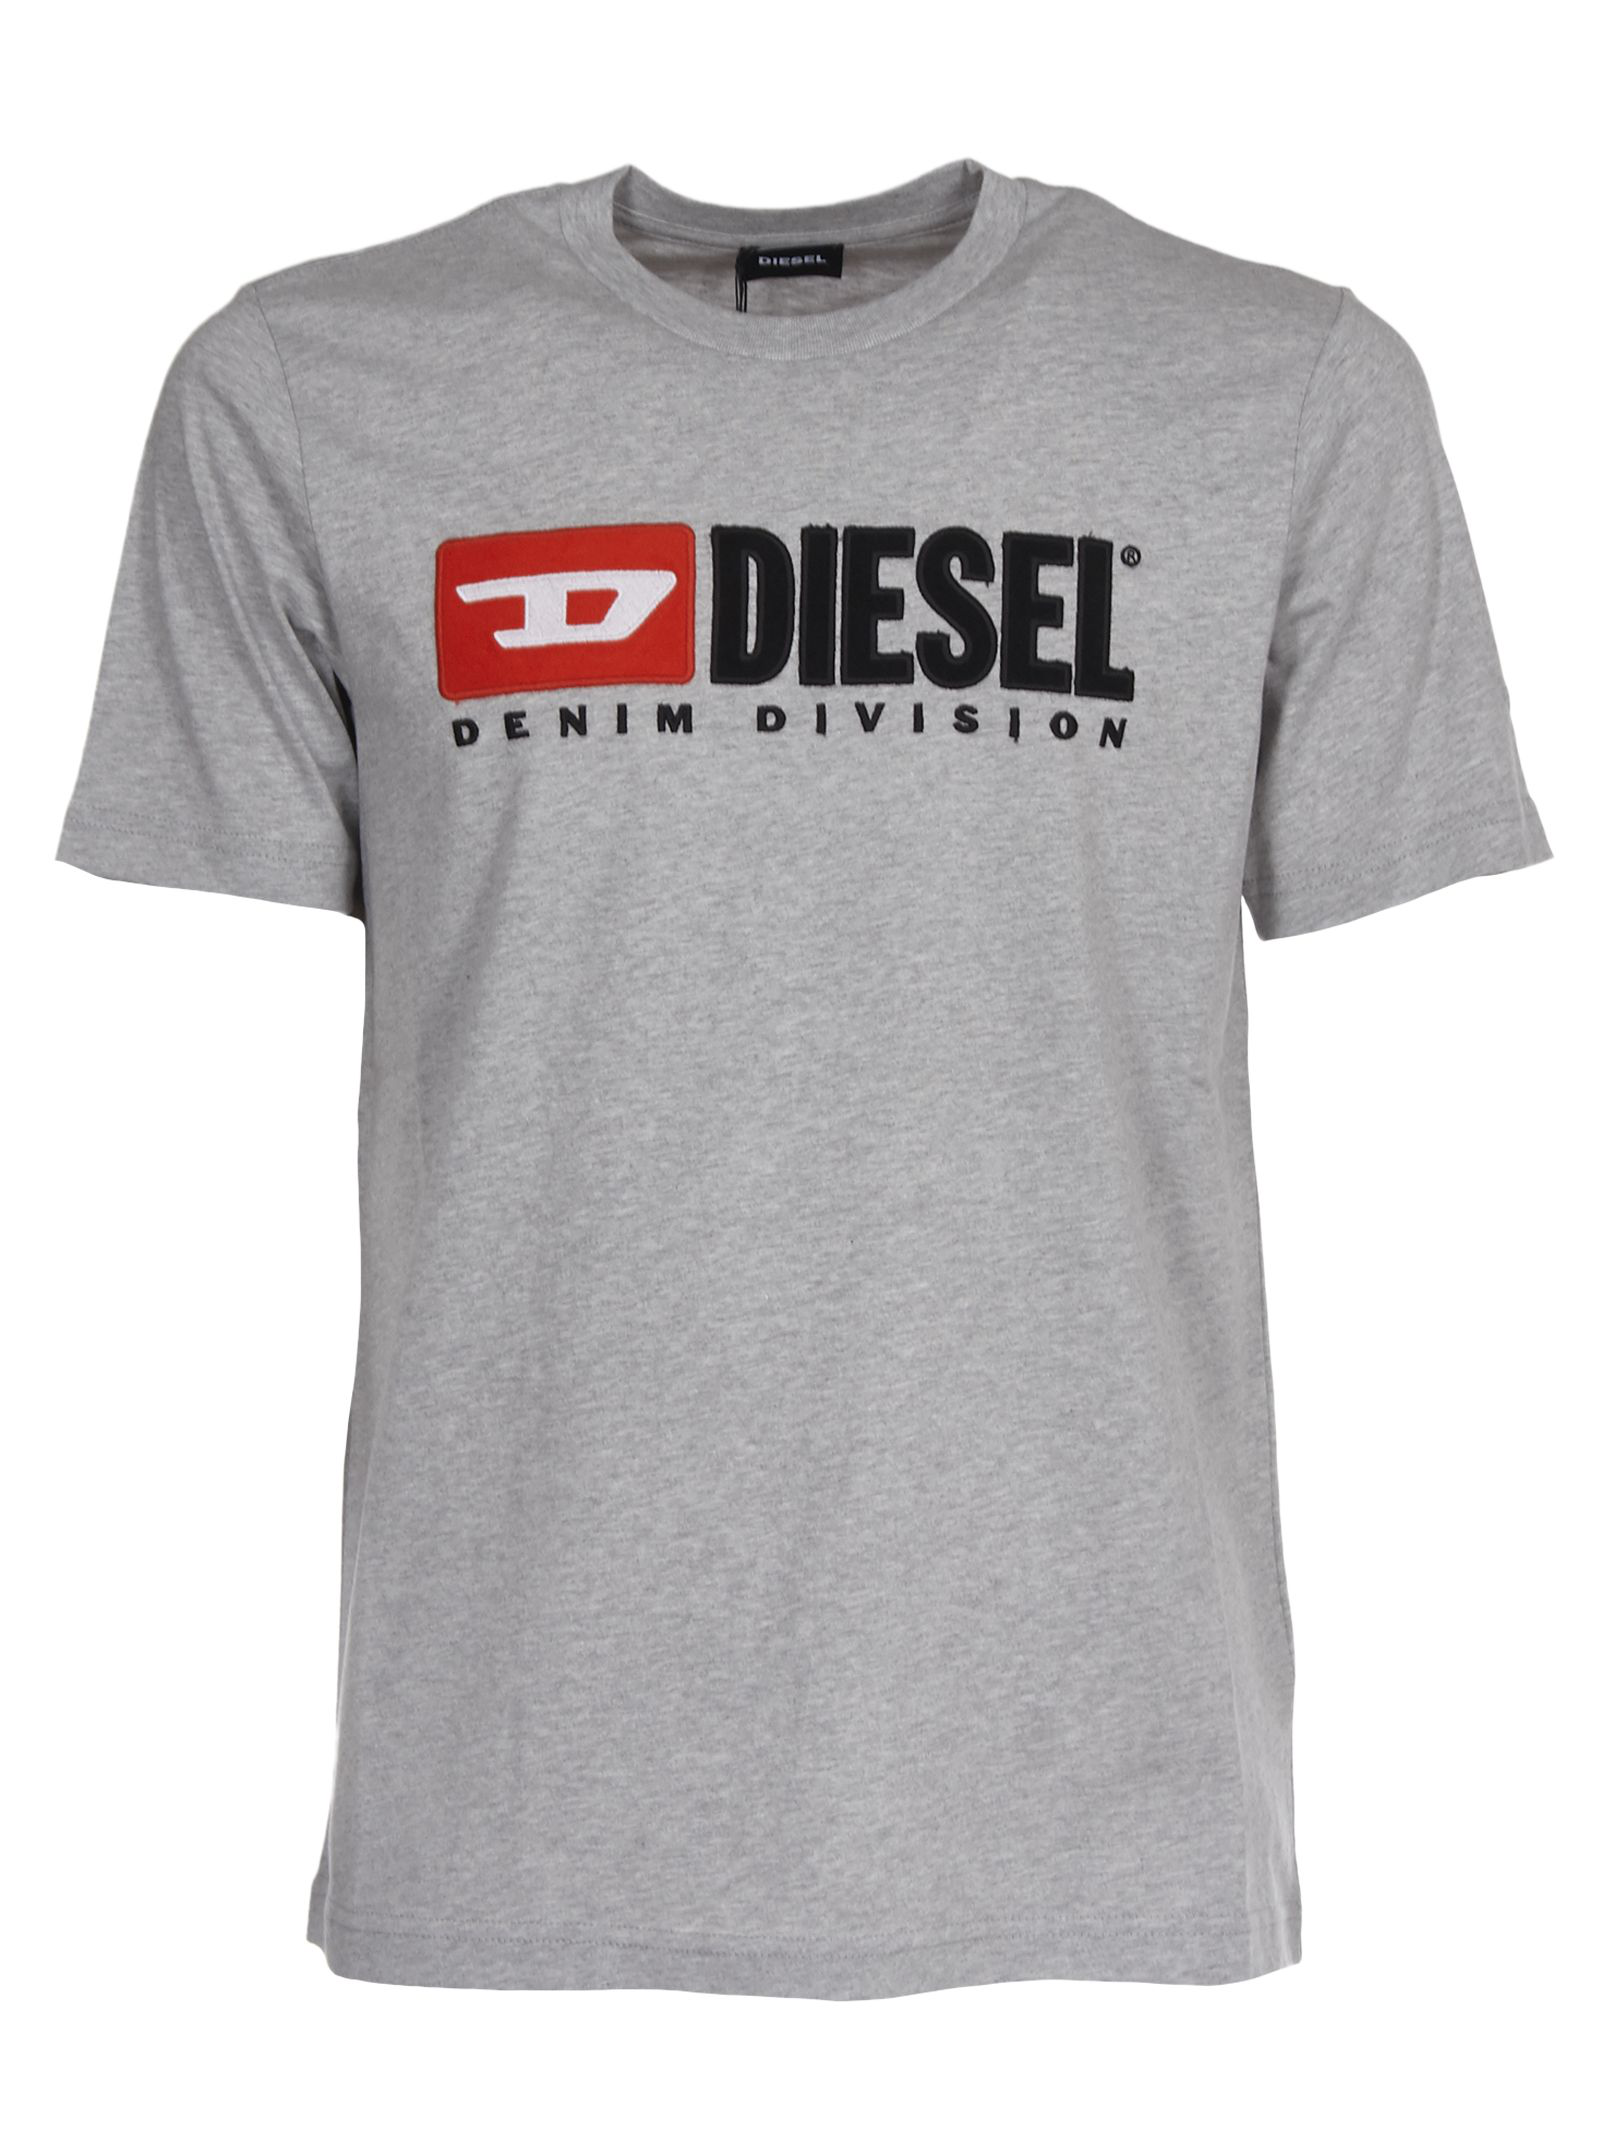 Diesel S-division T-shirt In Grey | ModeSens